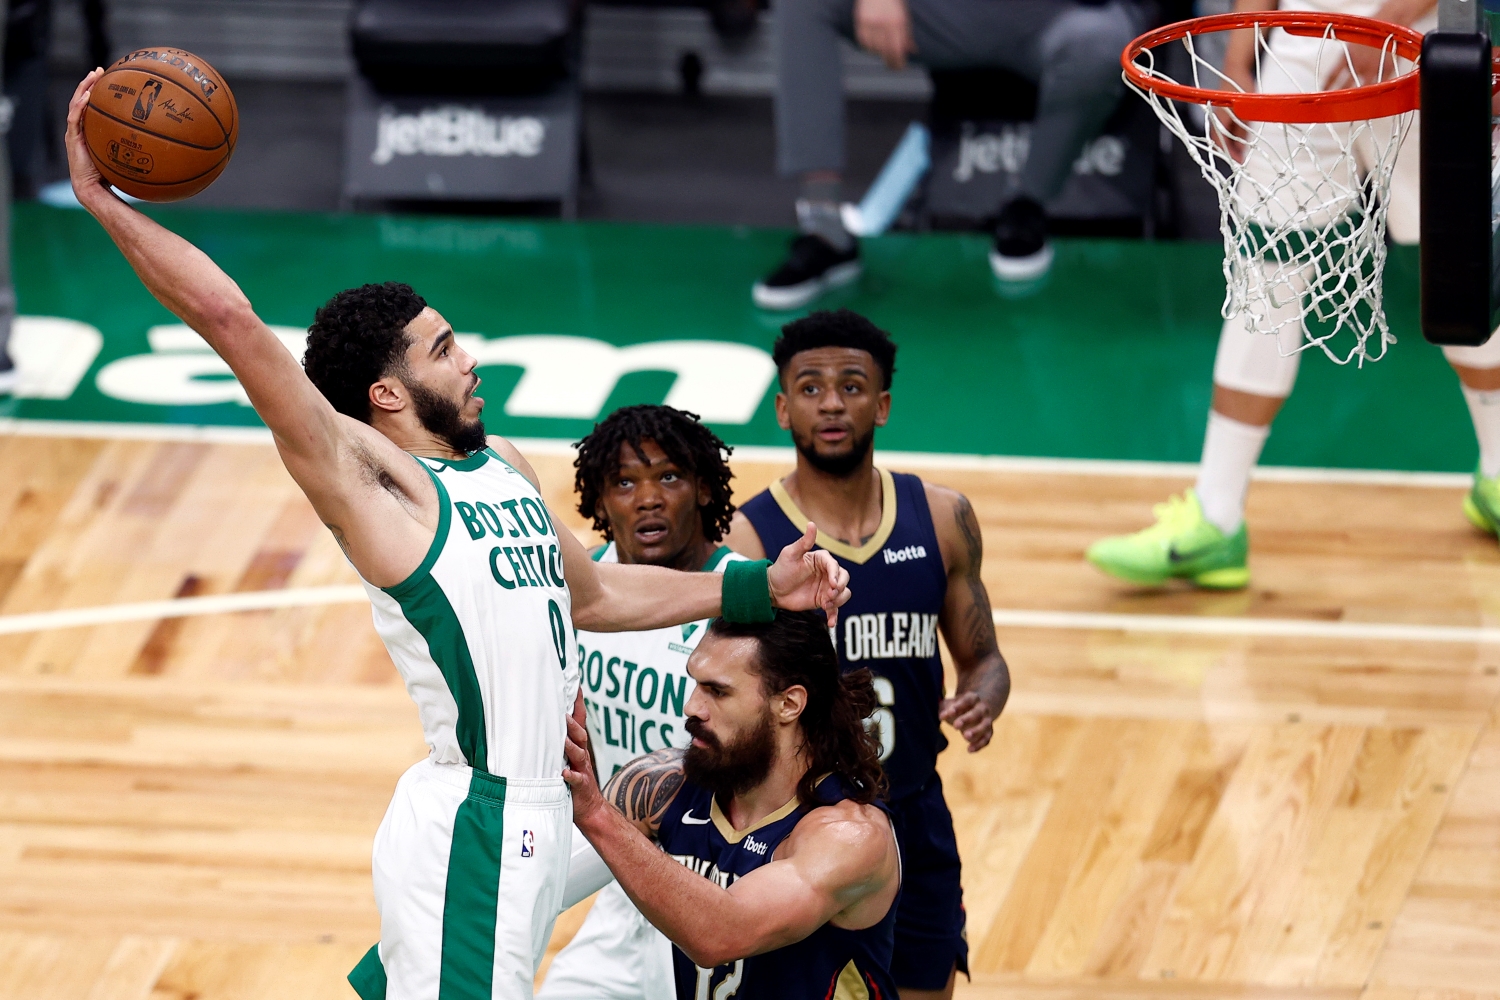 Celtics forward Jayson Tatum dunks the ball during a game.